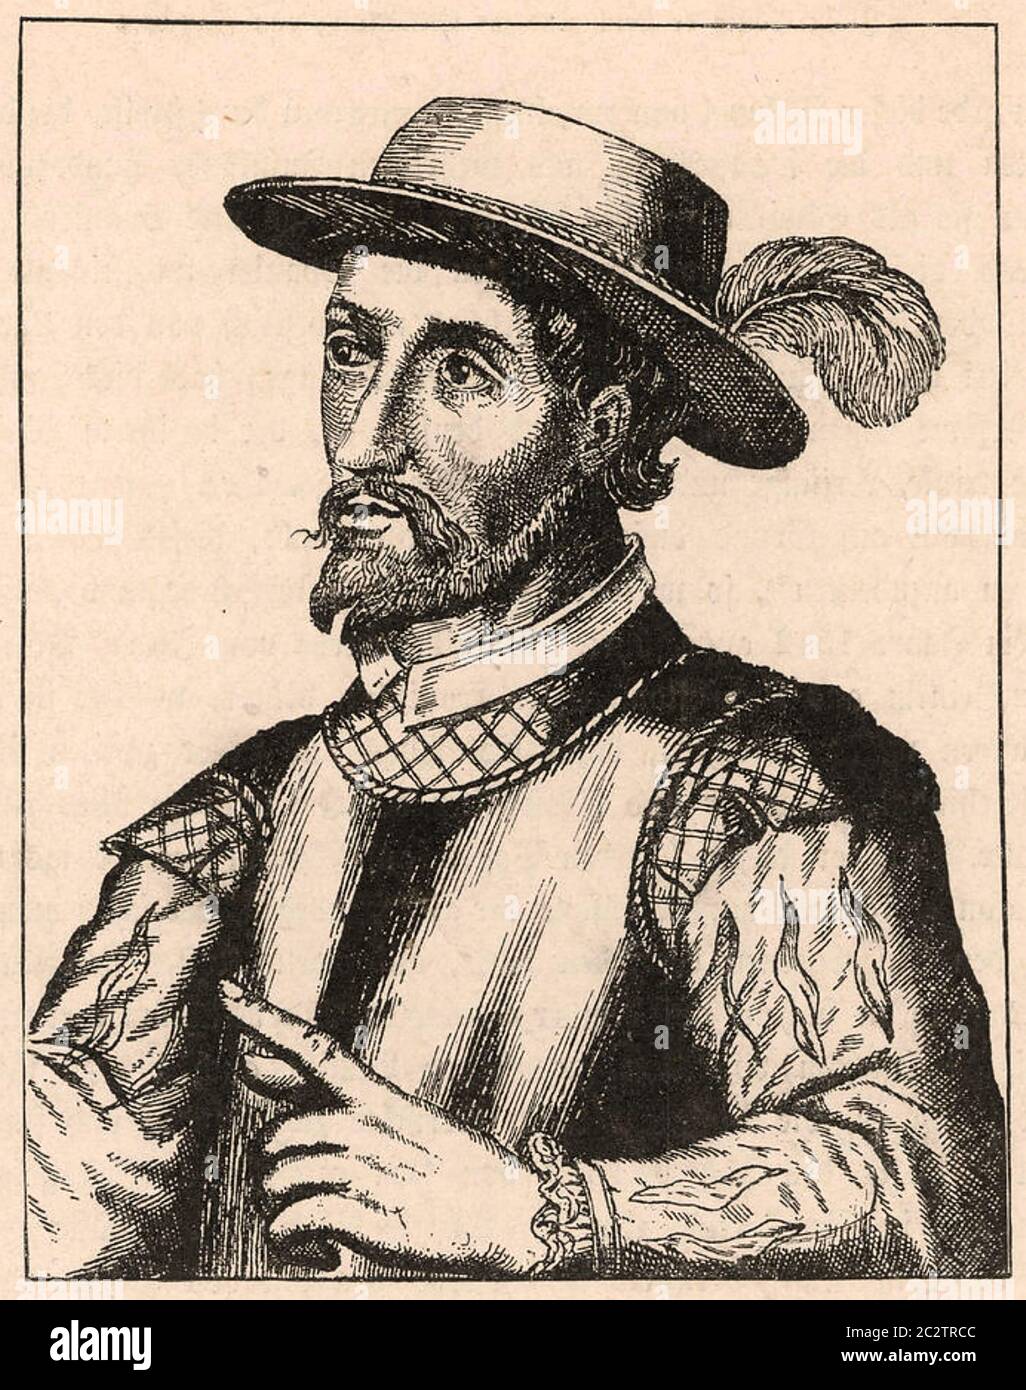 JUAN PONCE de LEÓN (1474-1521) Spanish explorer and conquistador Stock Photo